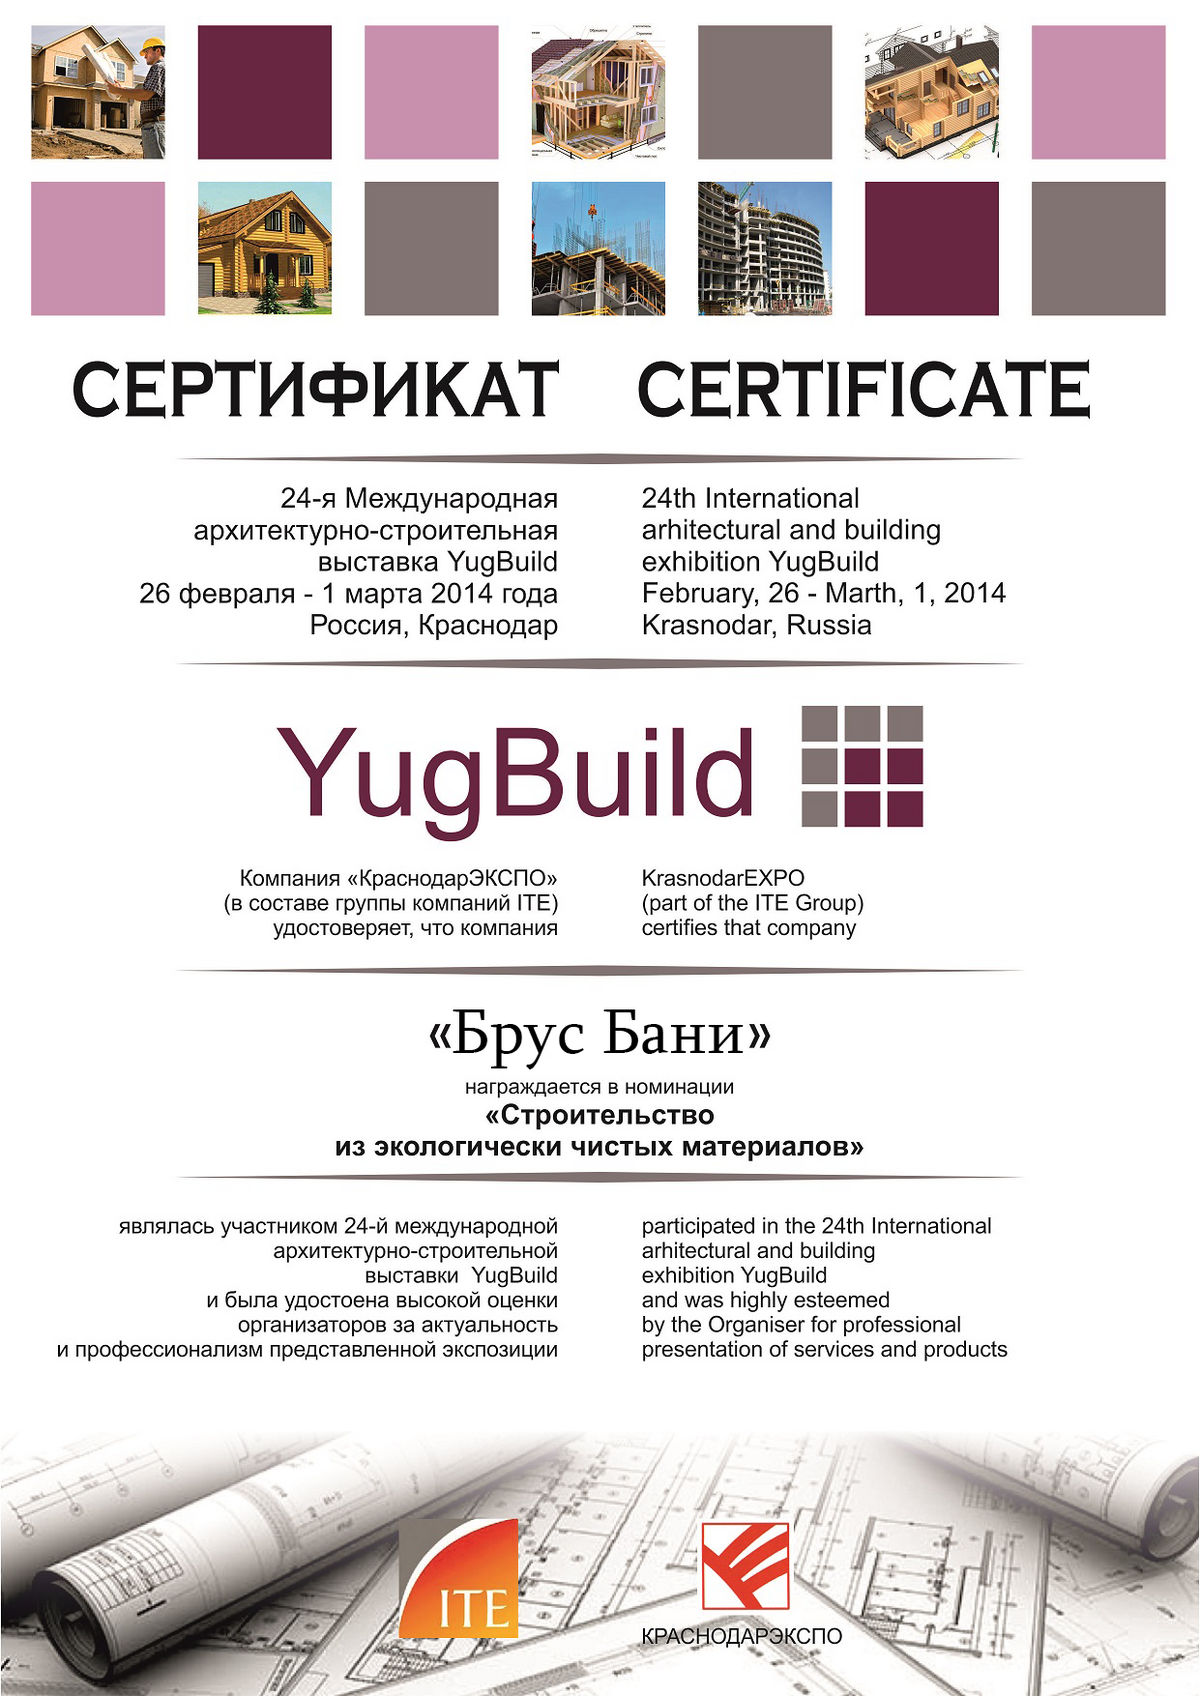 Сертификат компании Брус бани